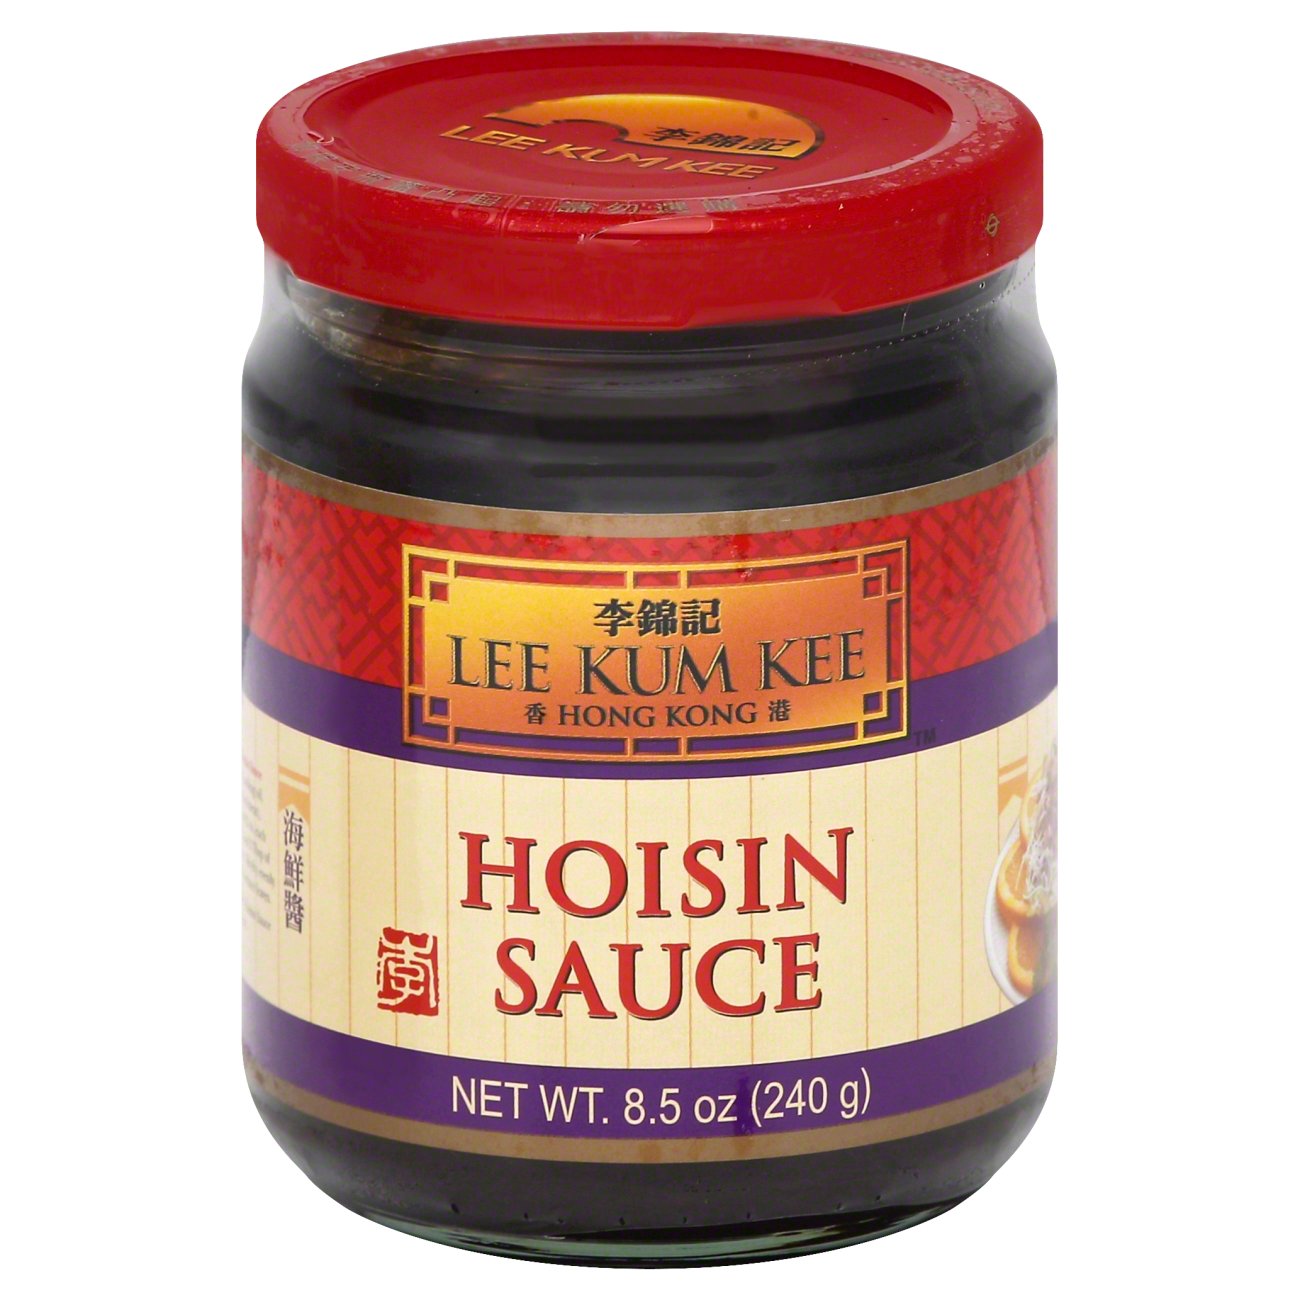 Lee Kum Kee Hoisin Sauce - Shop Specialty Sauces at H-E-B